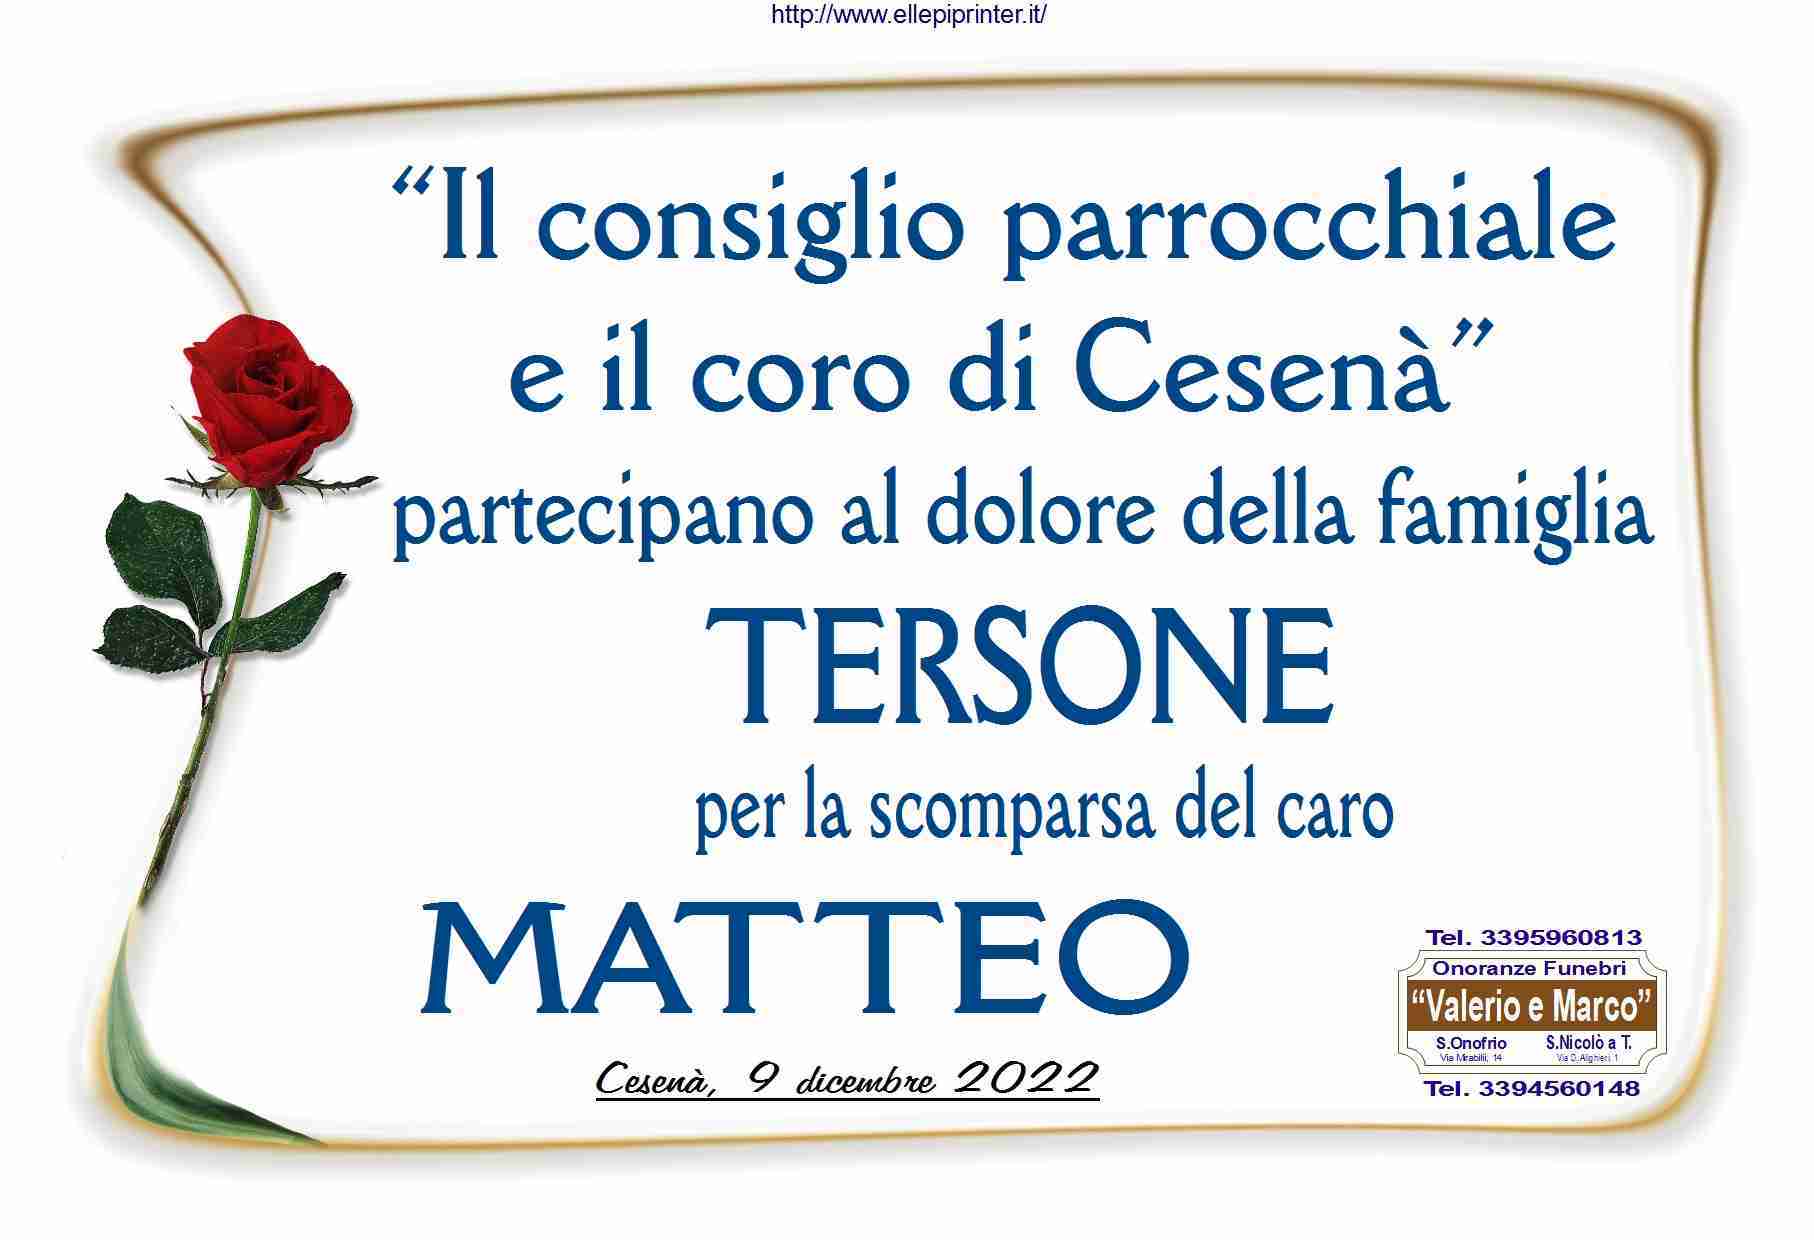 Matteo Tersone